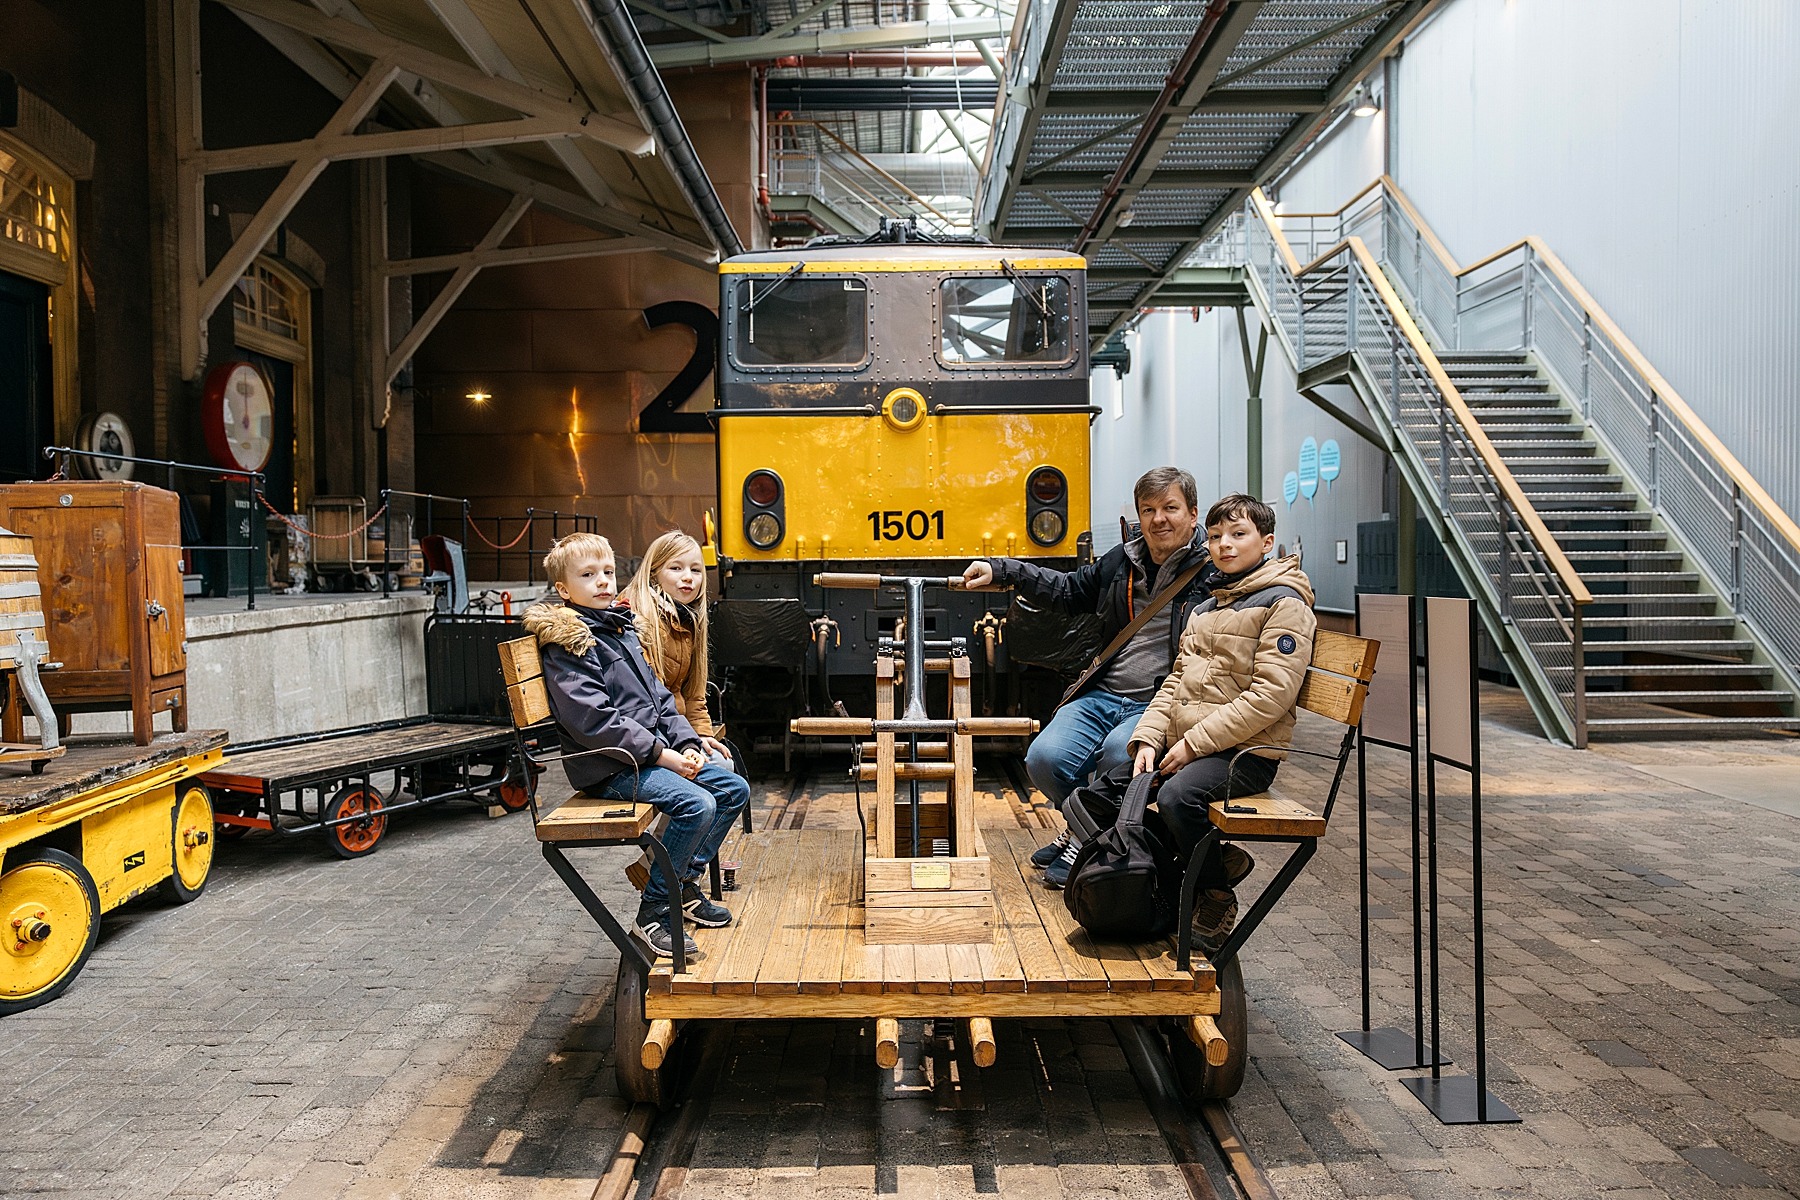 Spoorwegmuseum, l'incroyable musée du train de Utrecht 114